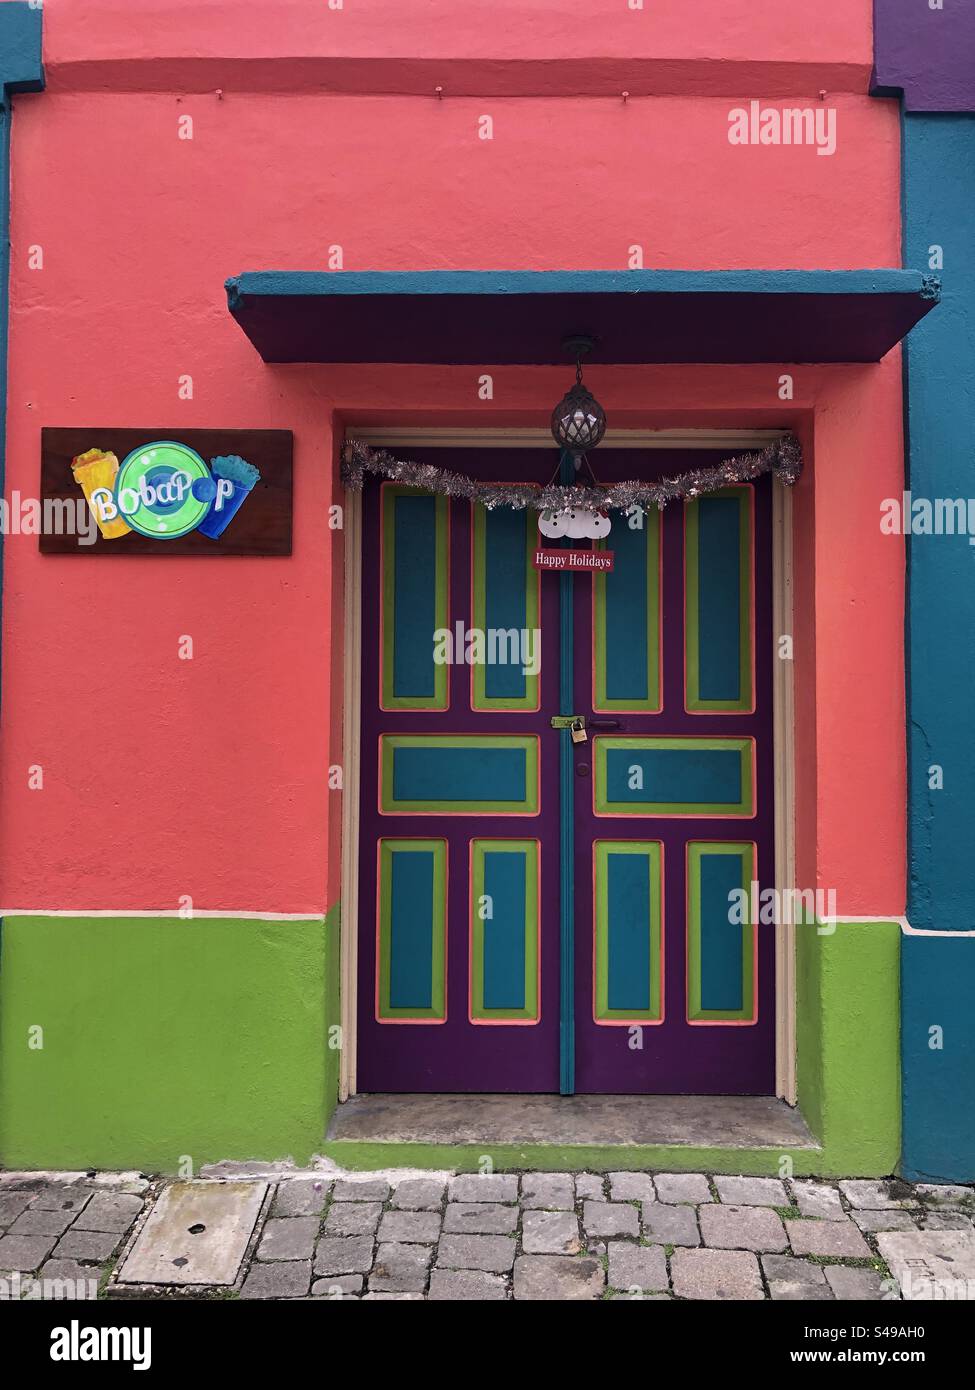 Farbenfrohe Fassade des Gebäudes in Flores, Guatemala. Stockfoto